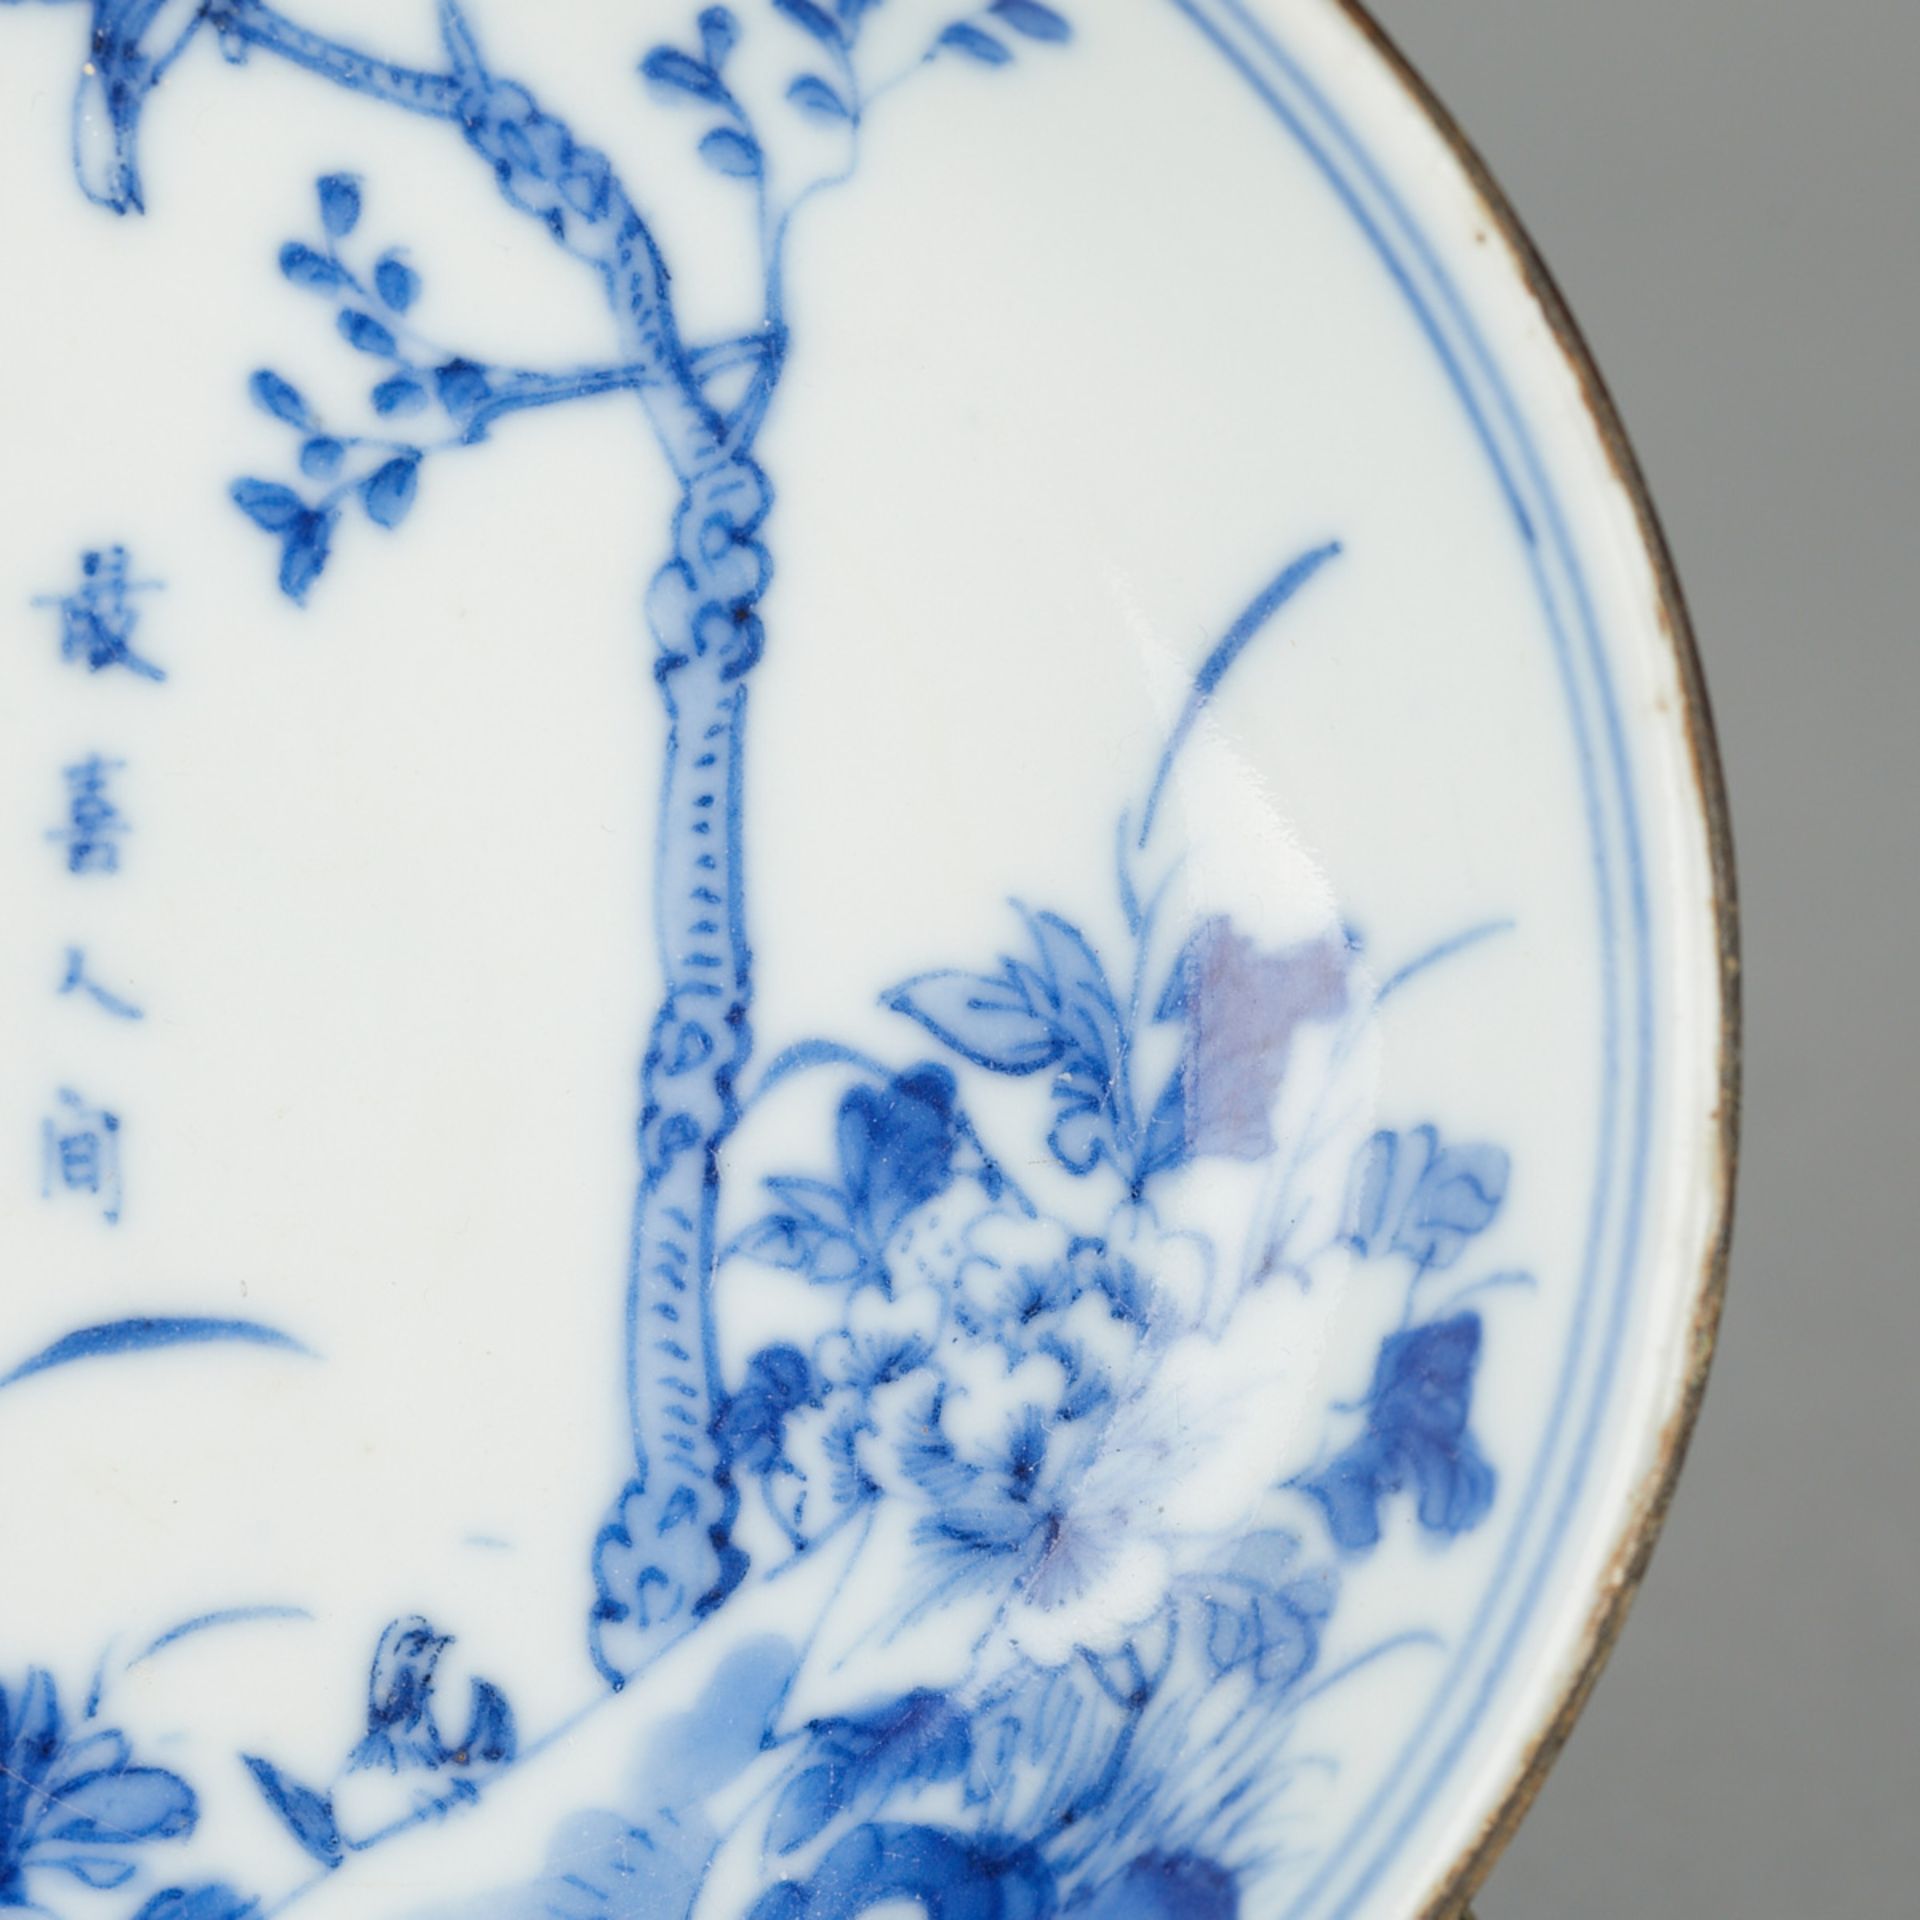 4 Bleu de Hue Chinese Porcelain Plates - Image 3 of 7